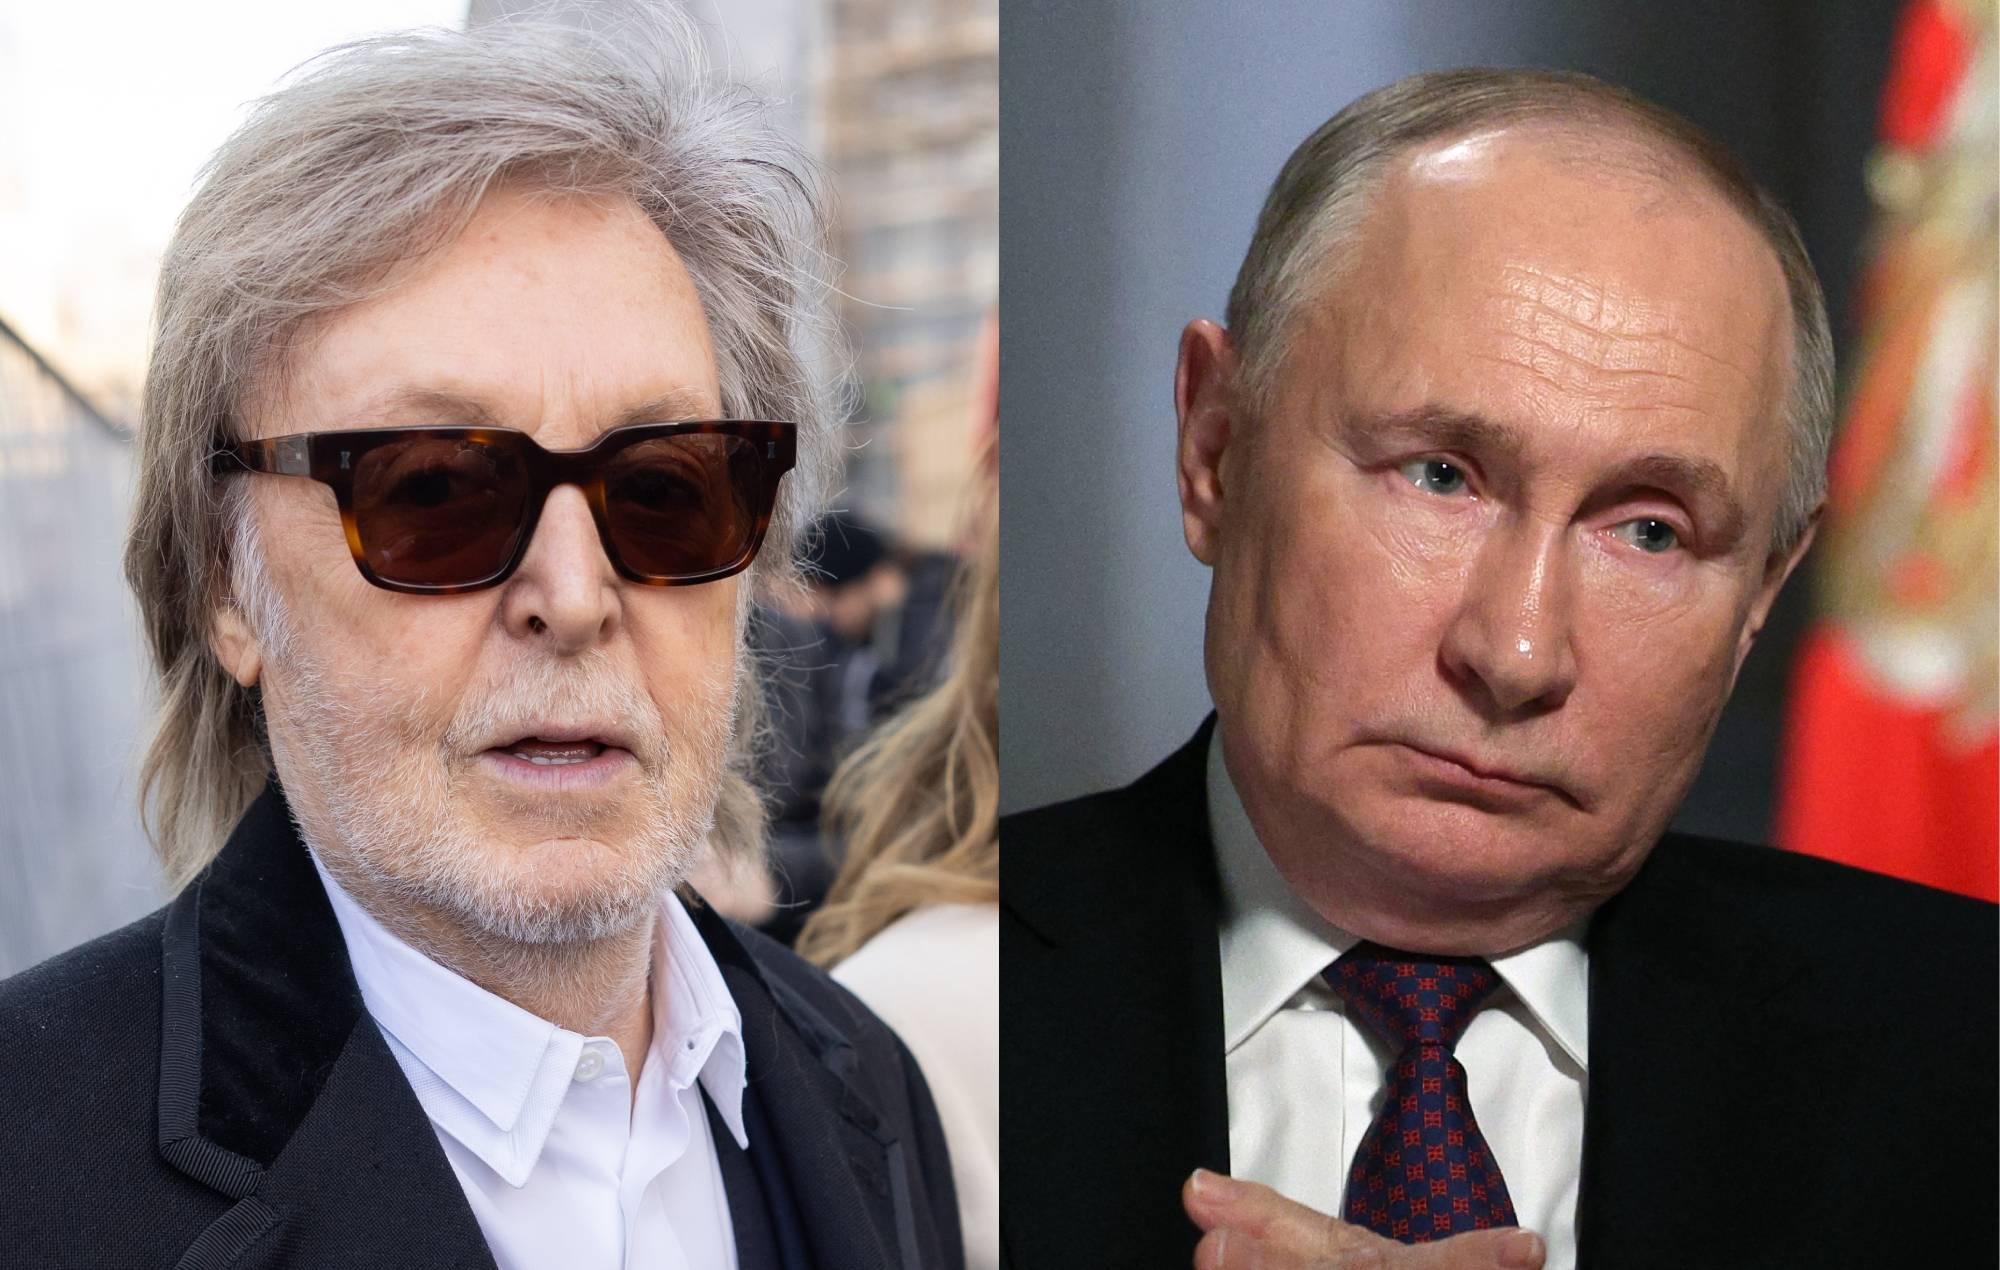 Paul McCartney asked Vladimir Putin to release Greenpeace prisoners by quoting him Beatles lyrics